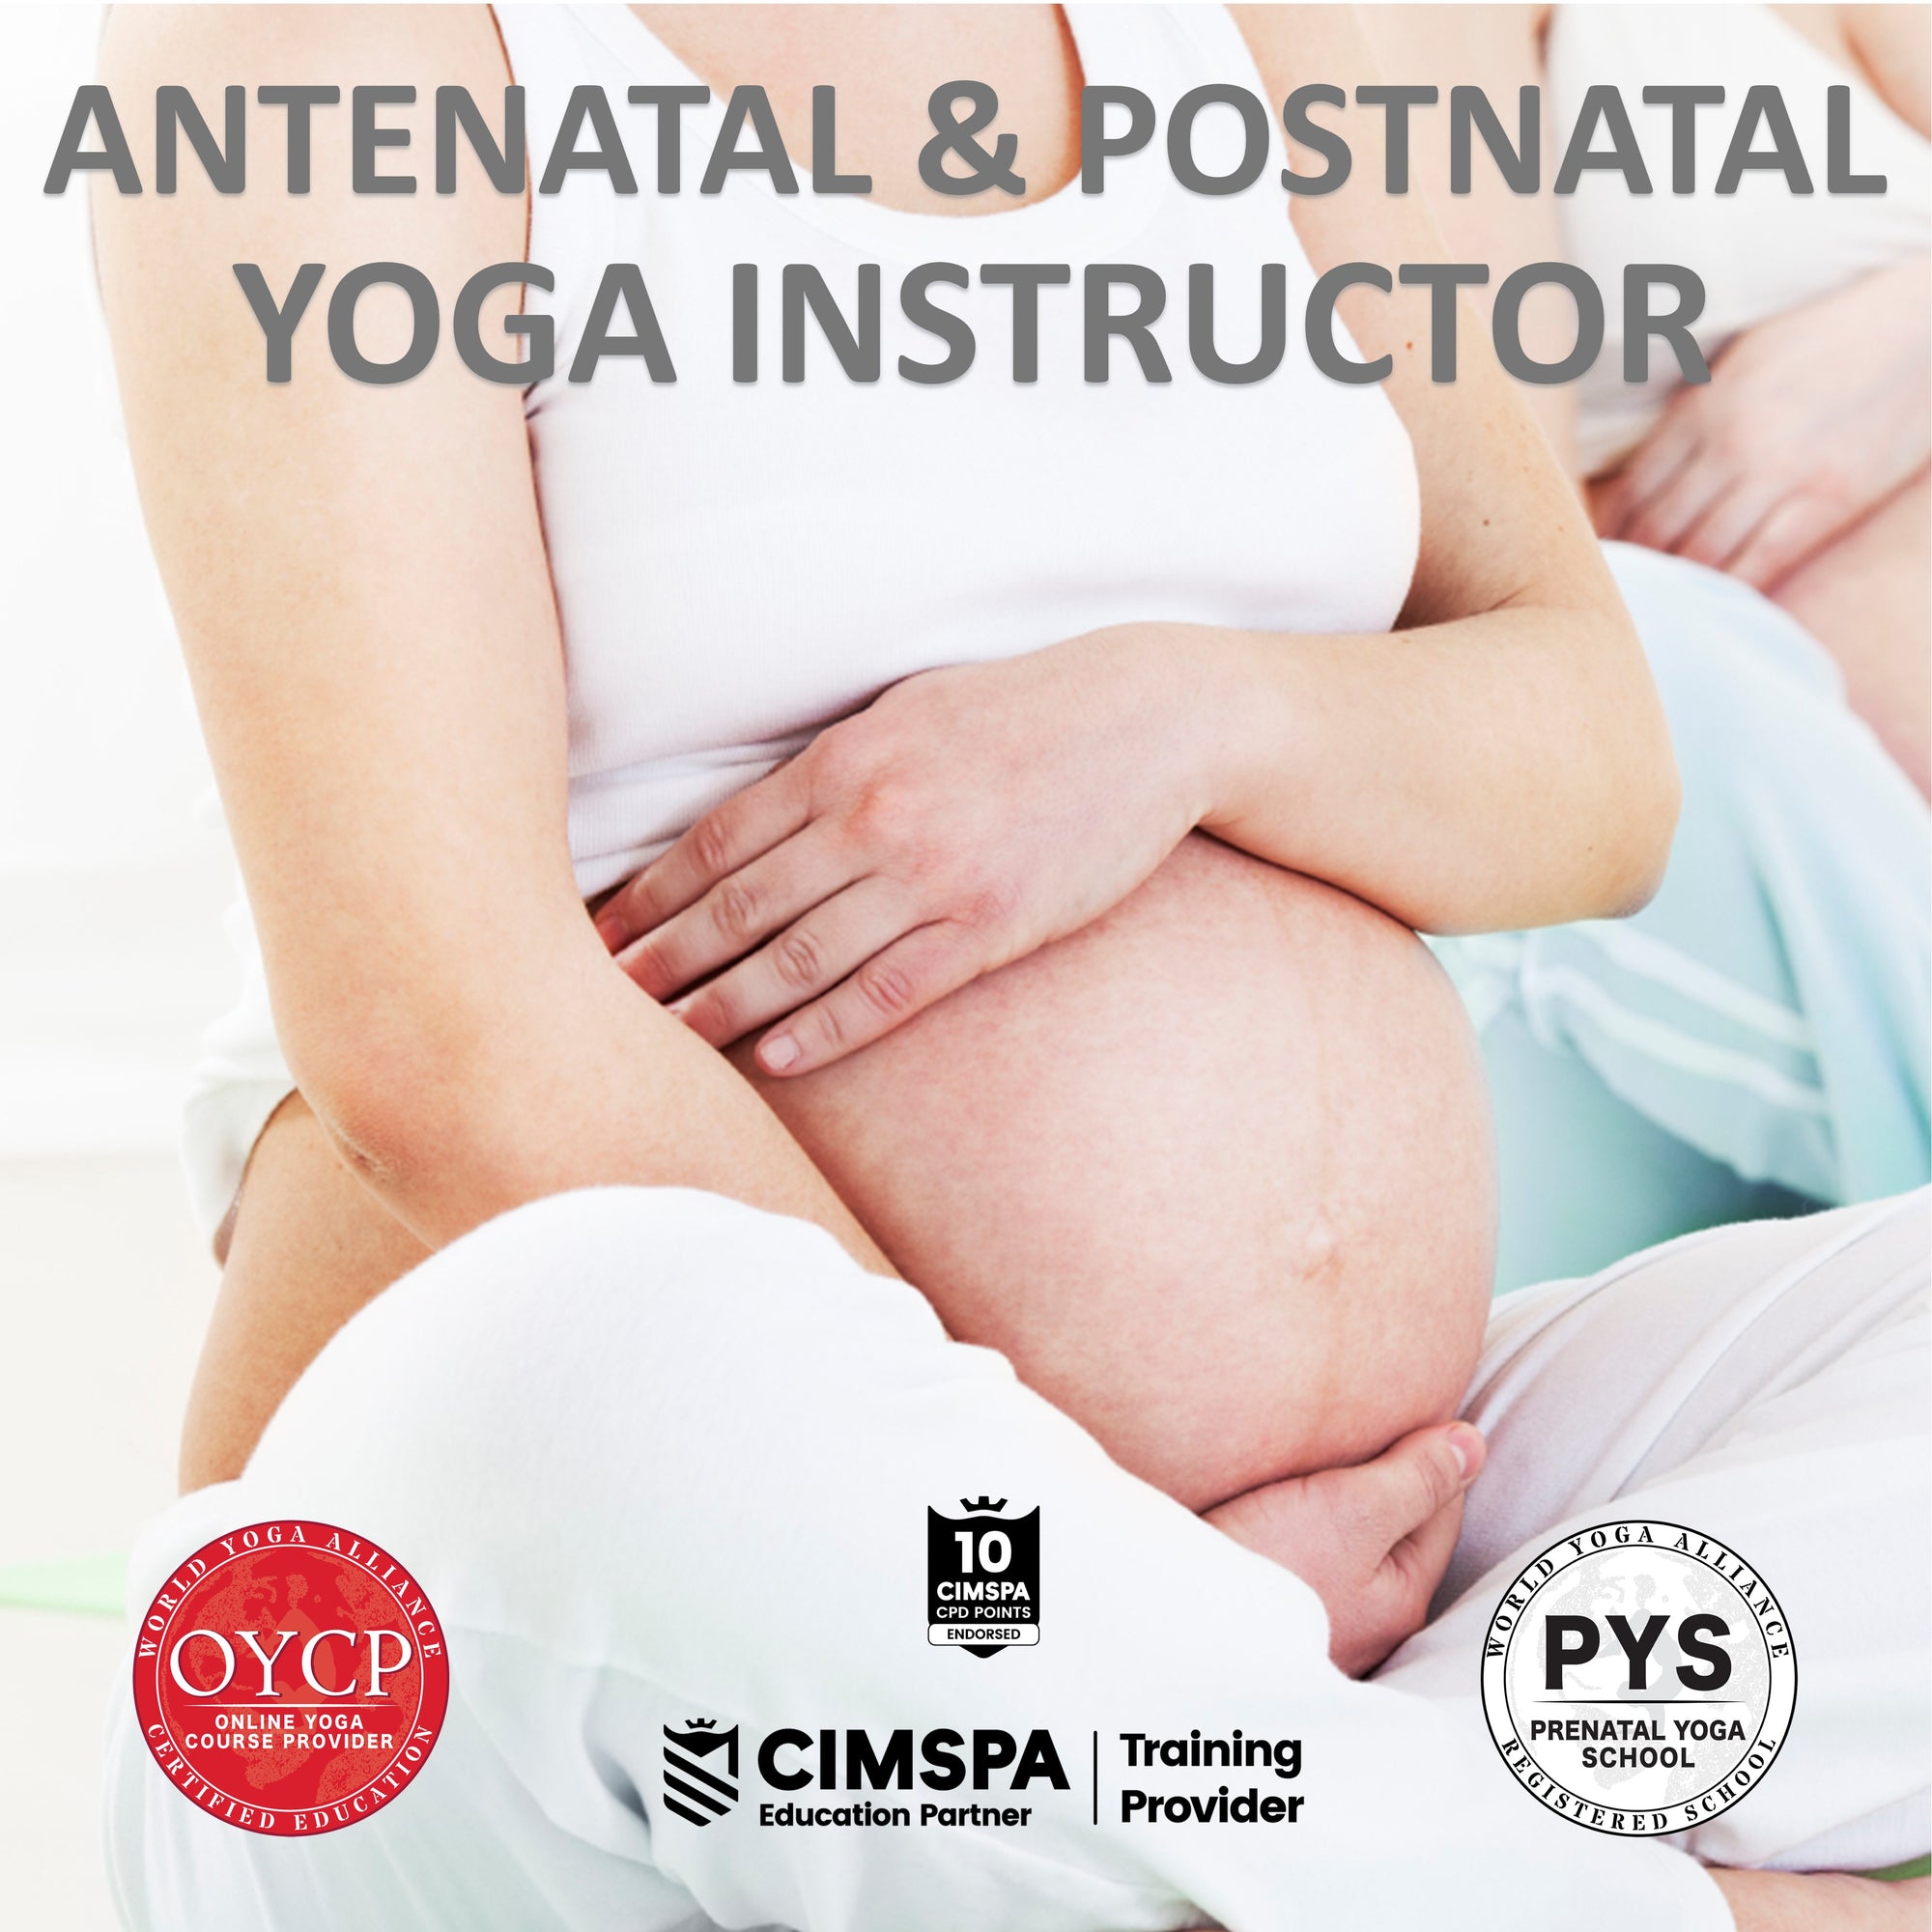 Antenatal & Postnatal Yoga Instructor